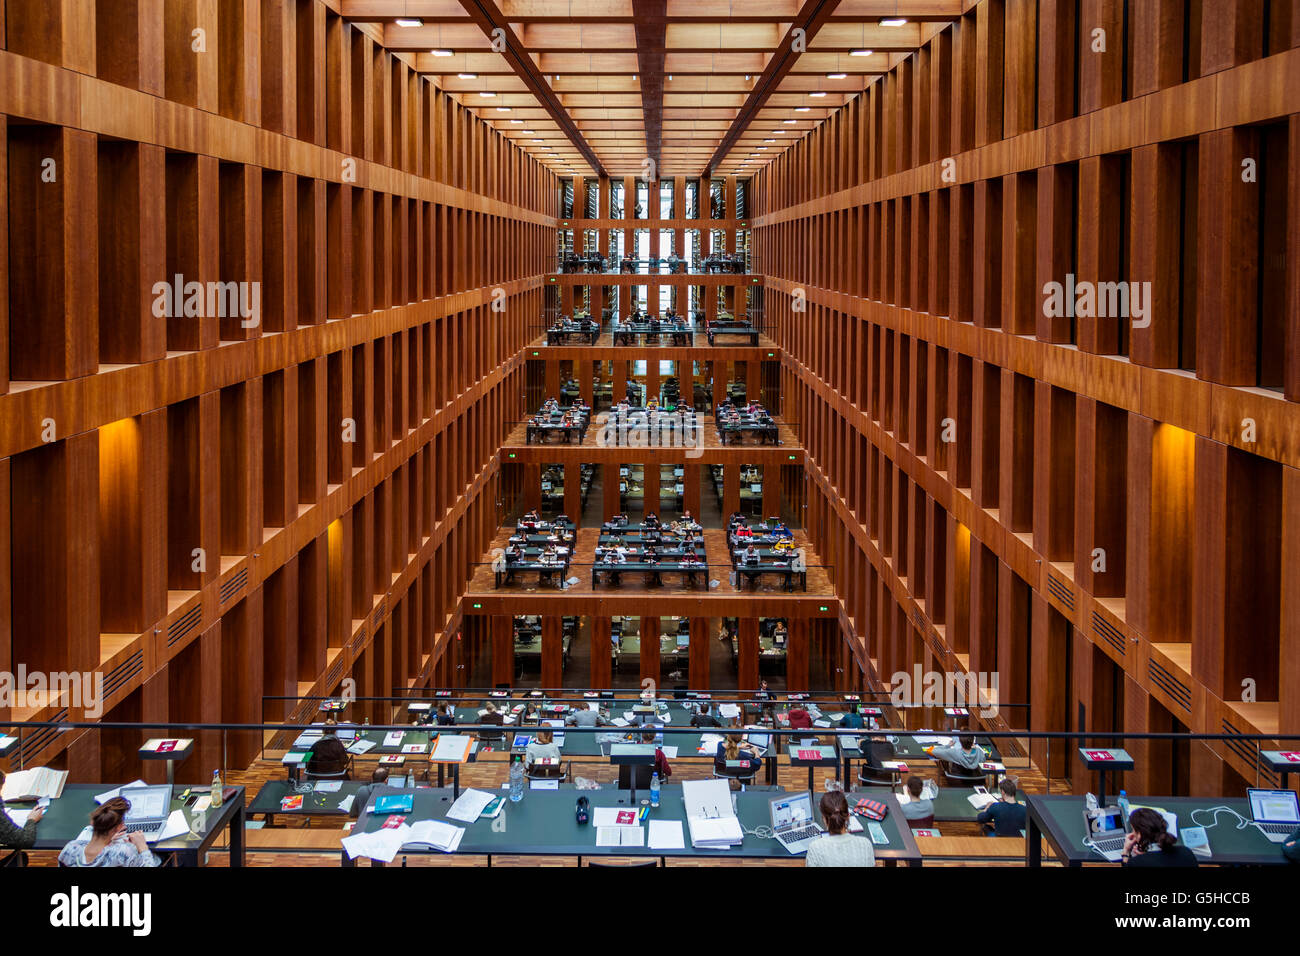 Humboldt University Bibliothek